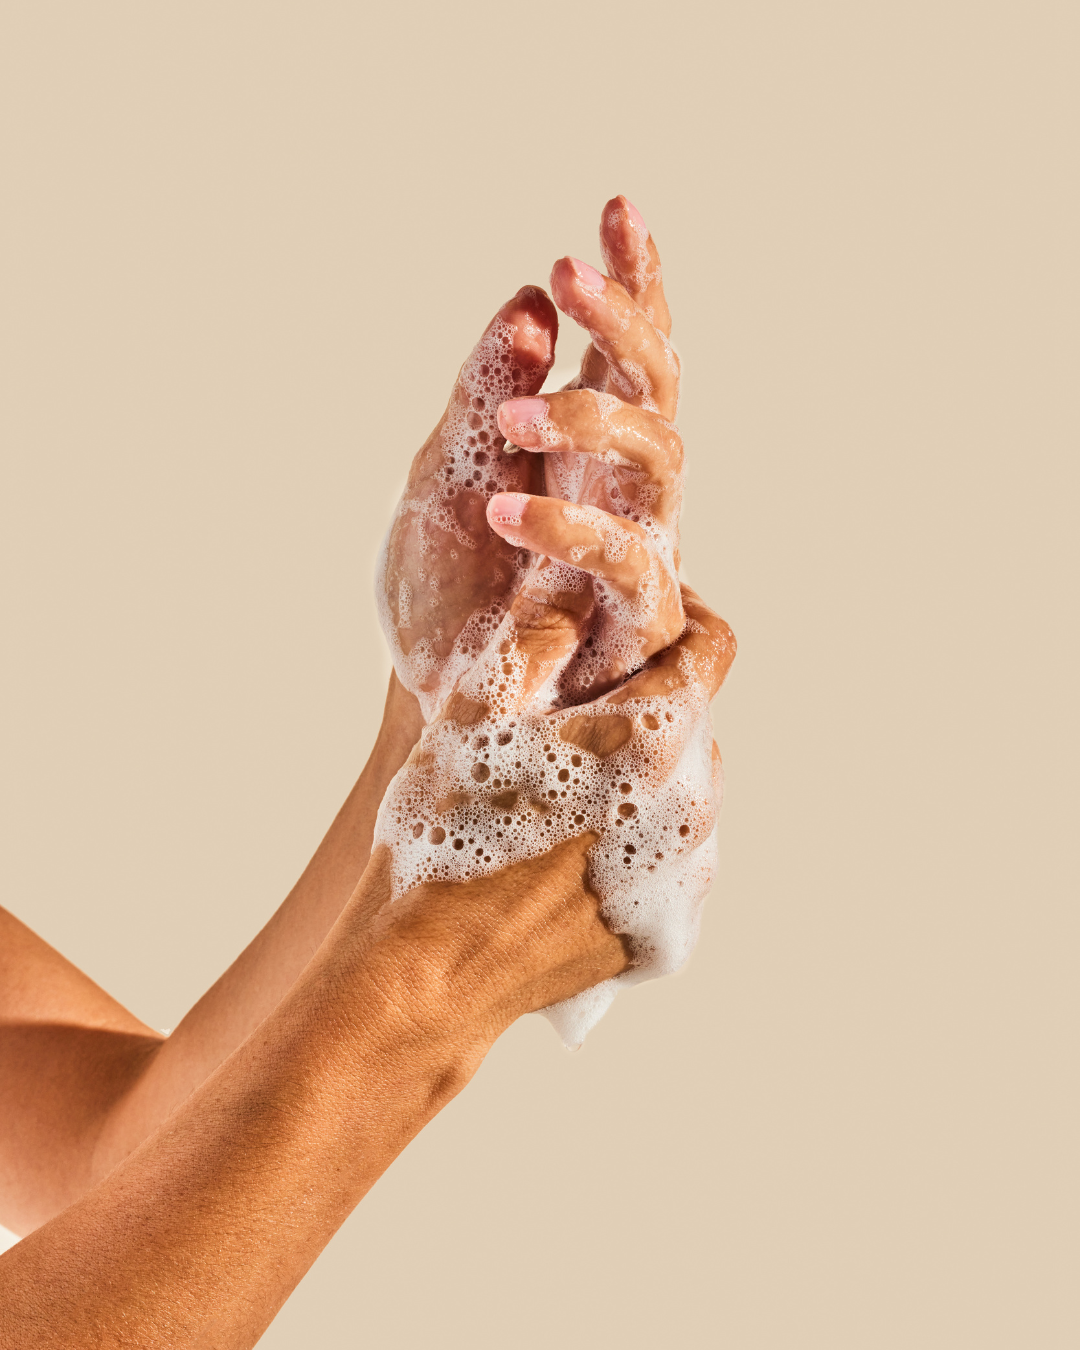 Hand + Body Wash Refill